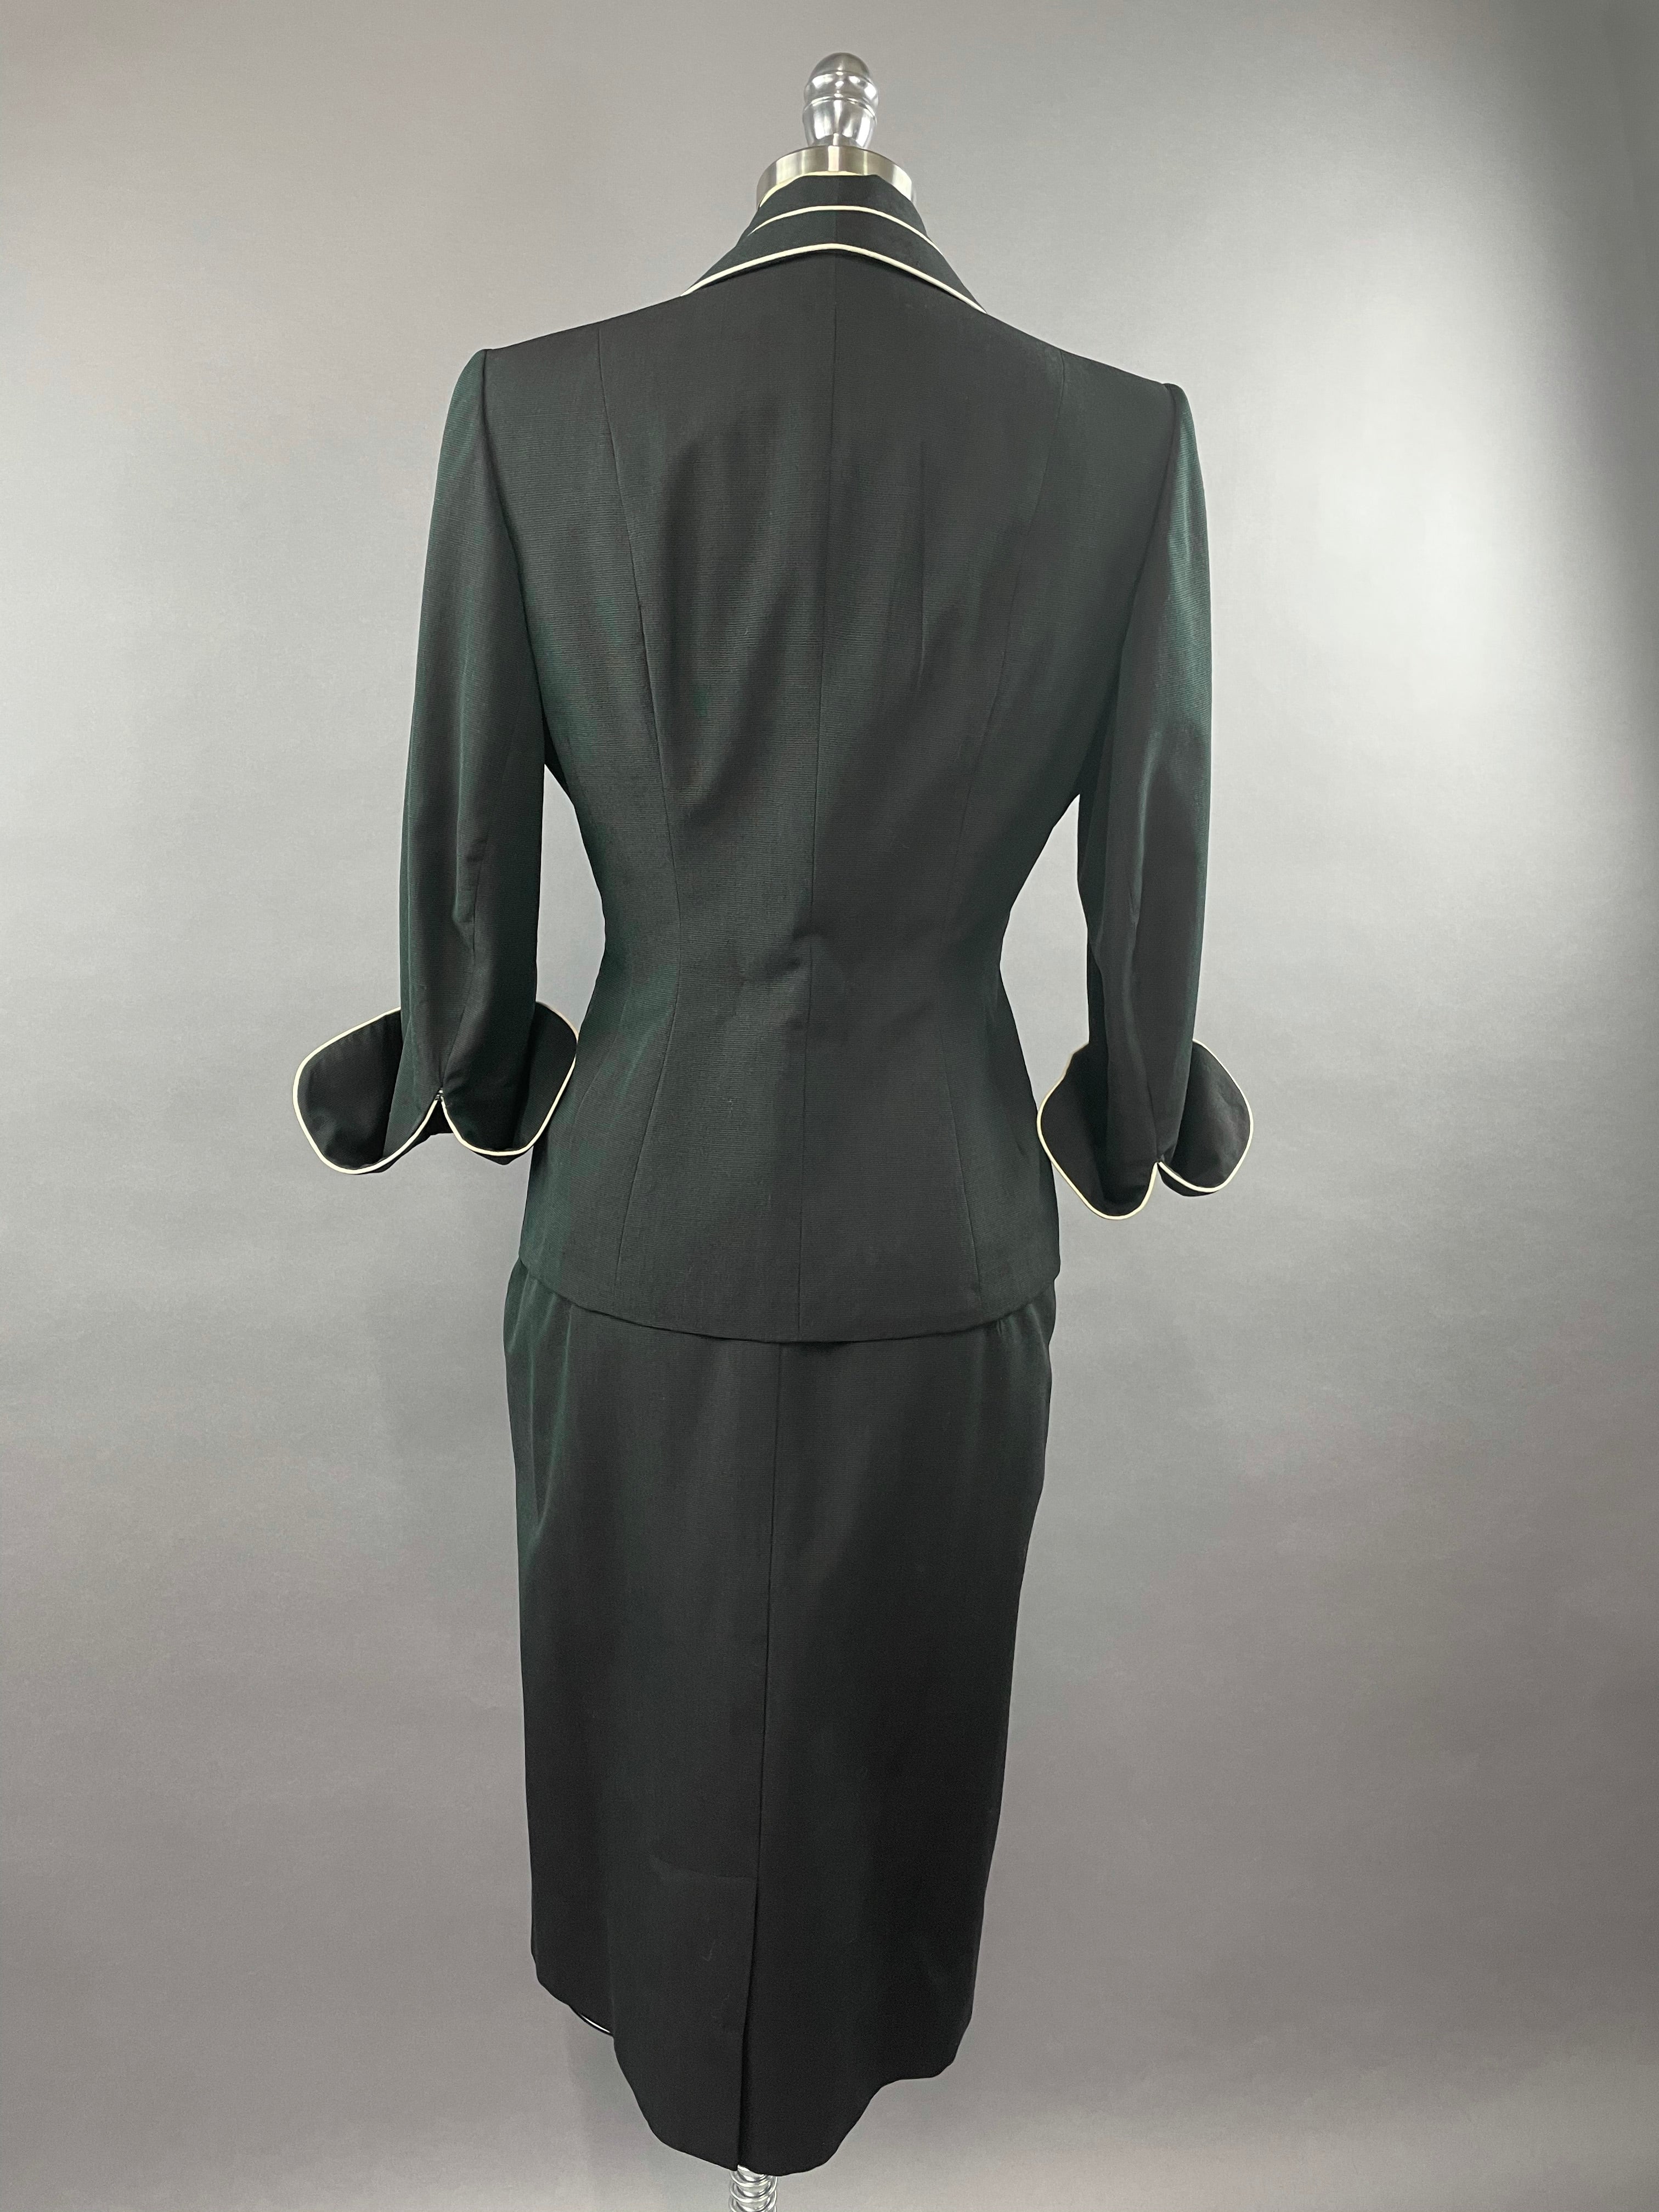 1950s Lilli Ann Lilli Annette Dark Blue Shot Skirt Suit Size S